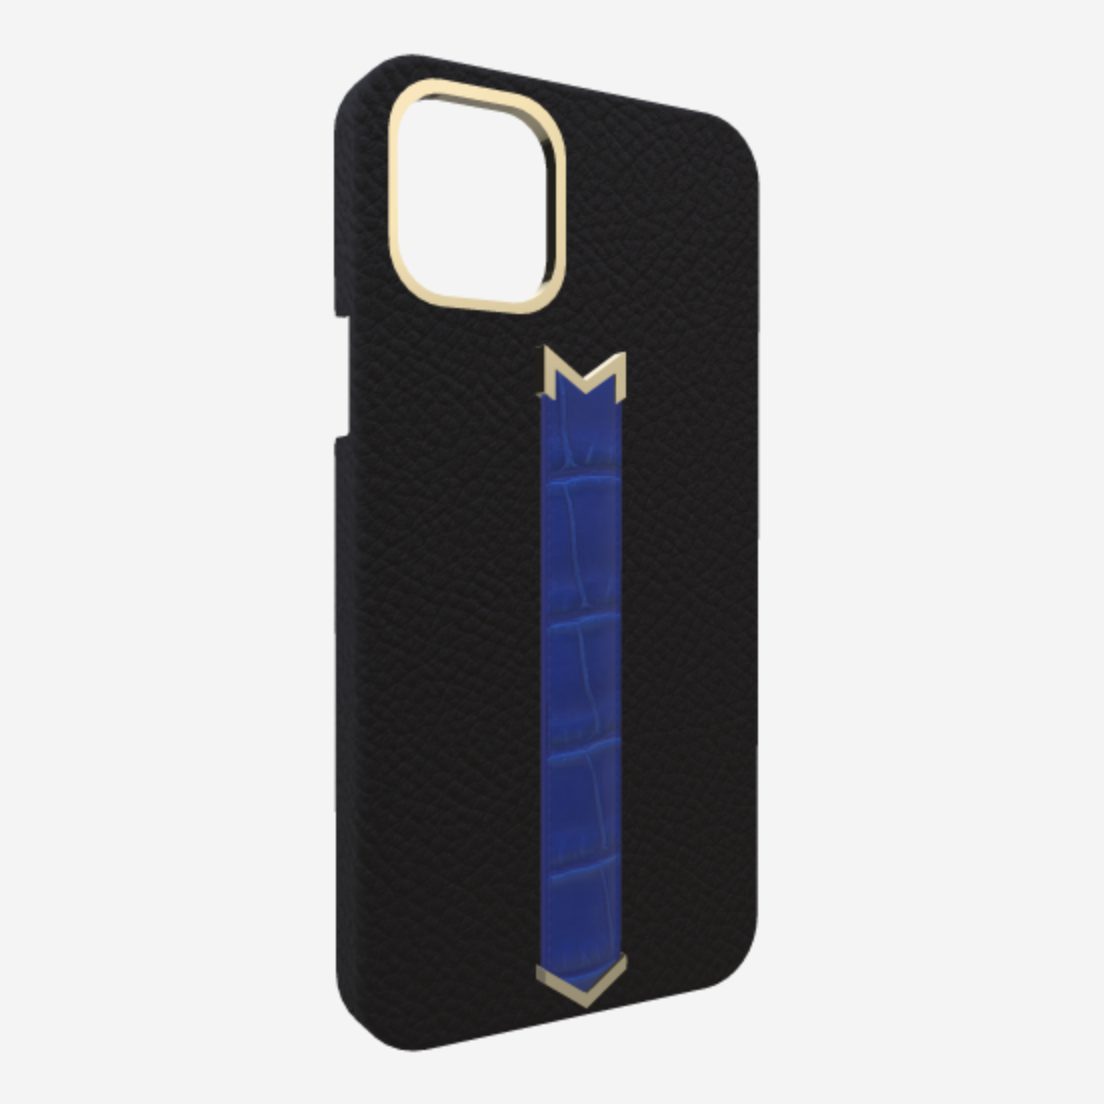 Gold Finger Strap Case for iPhone 13 Pro Max in Genuine Calfskin and Alligator Bond Black Electric Blue 